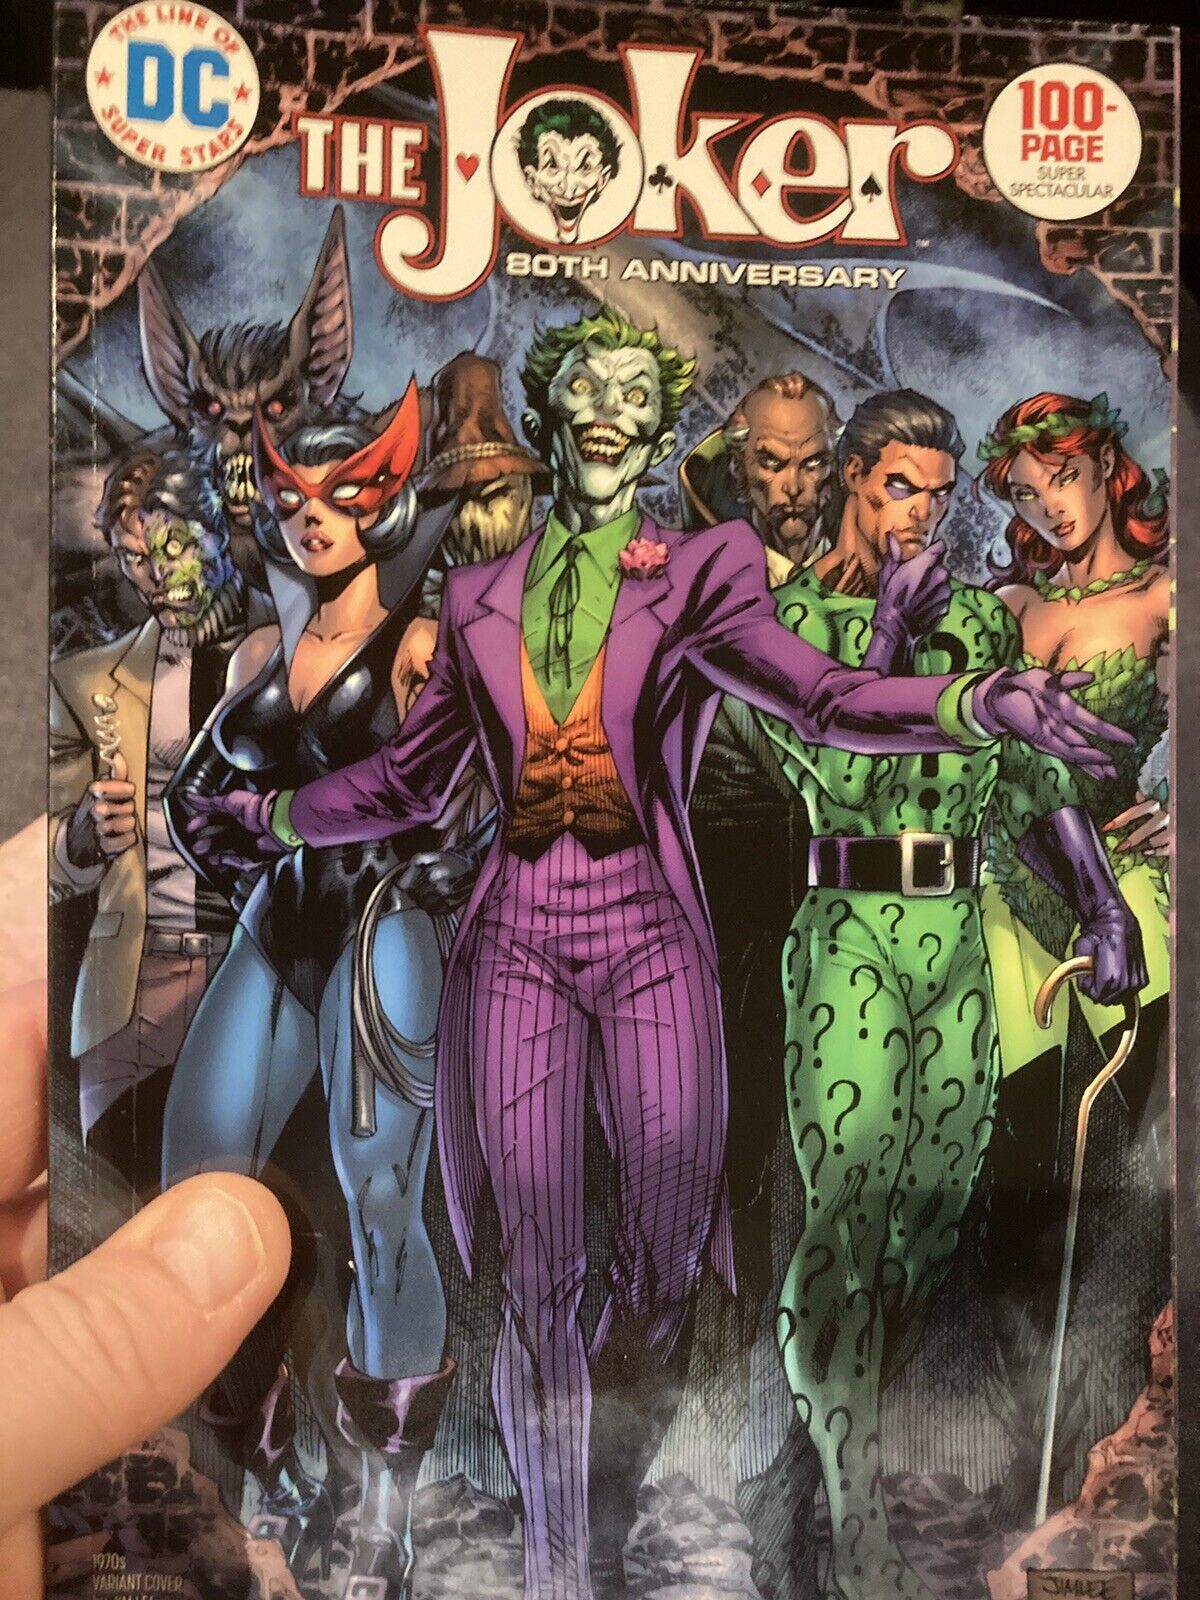 DC COMICS JOKER 80TH ANNIVERSARY 100 PAGE SUPER SPECT #1 1970S JIM LEE VARIANT 